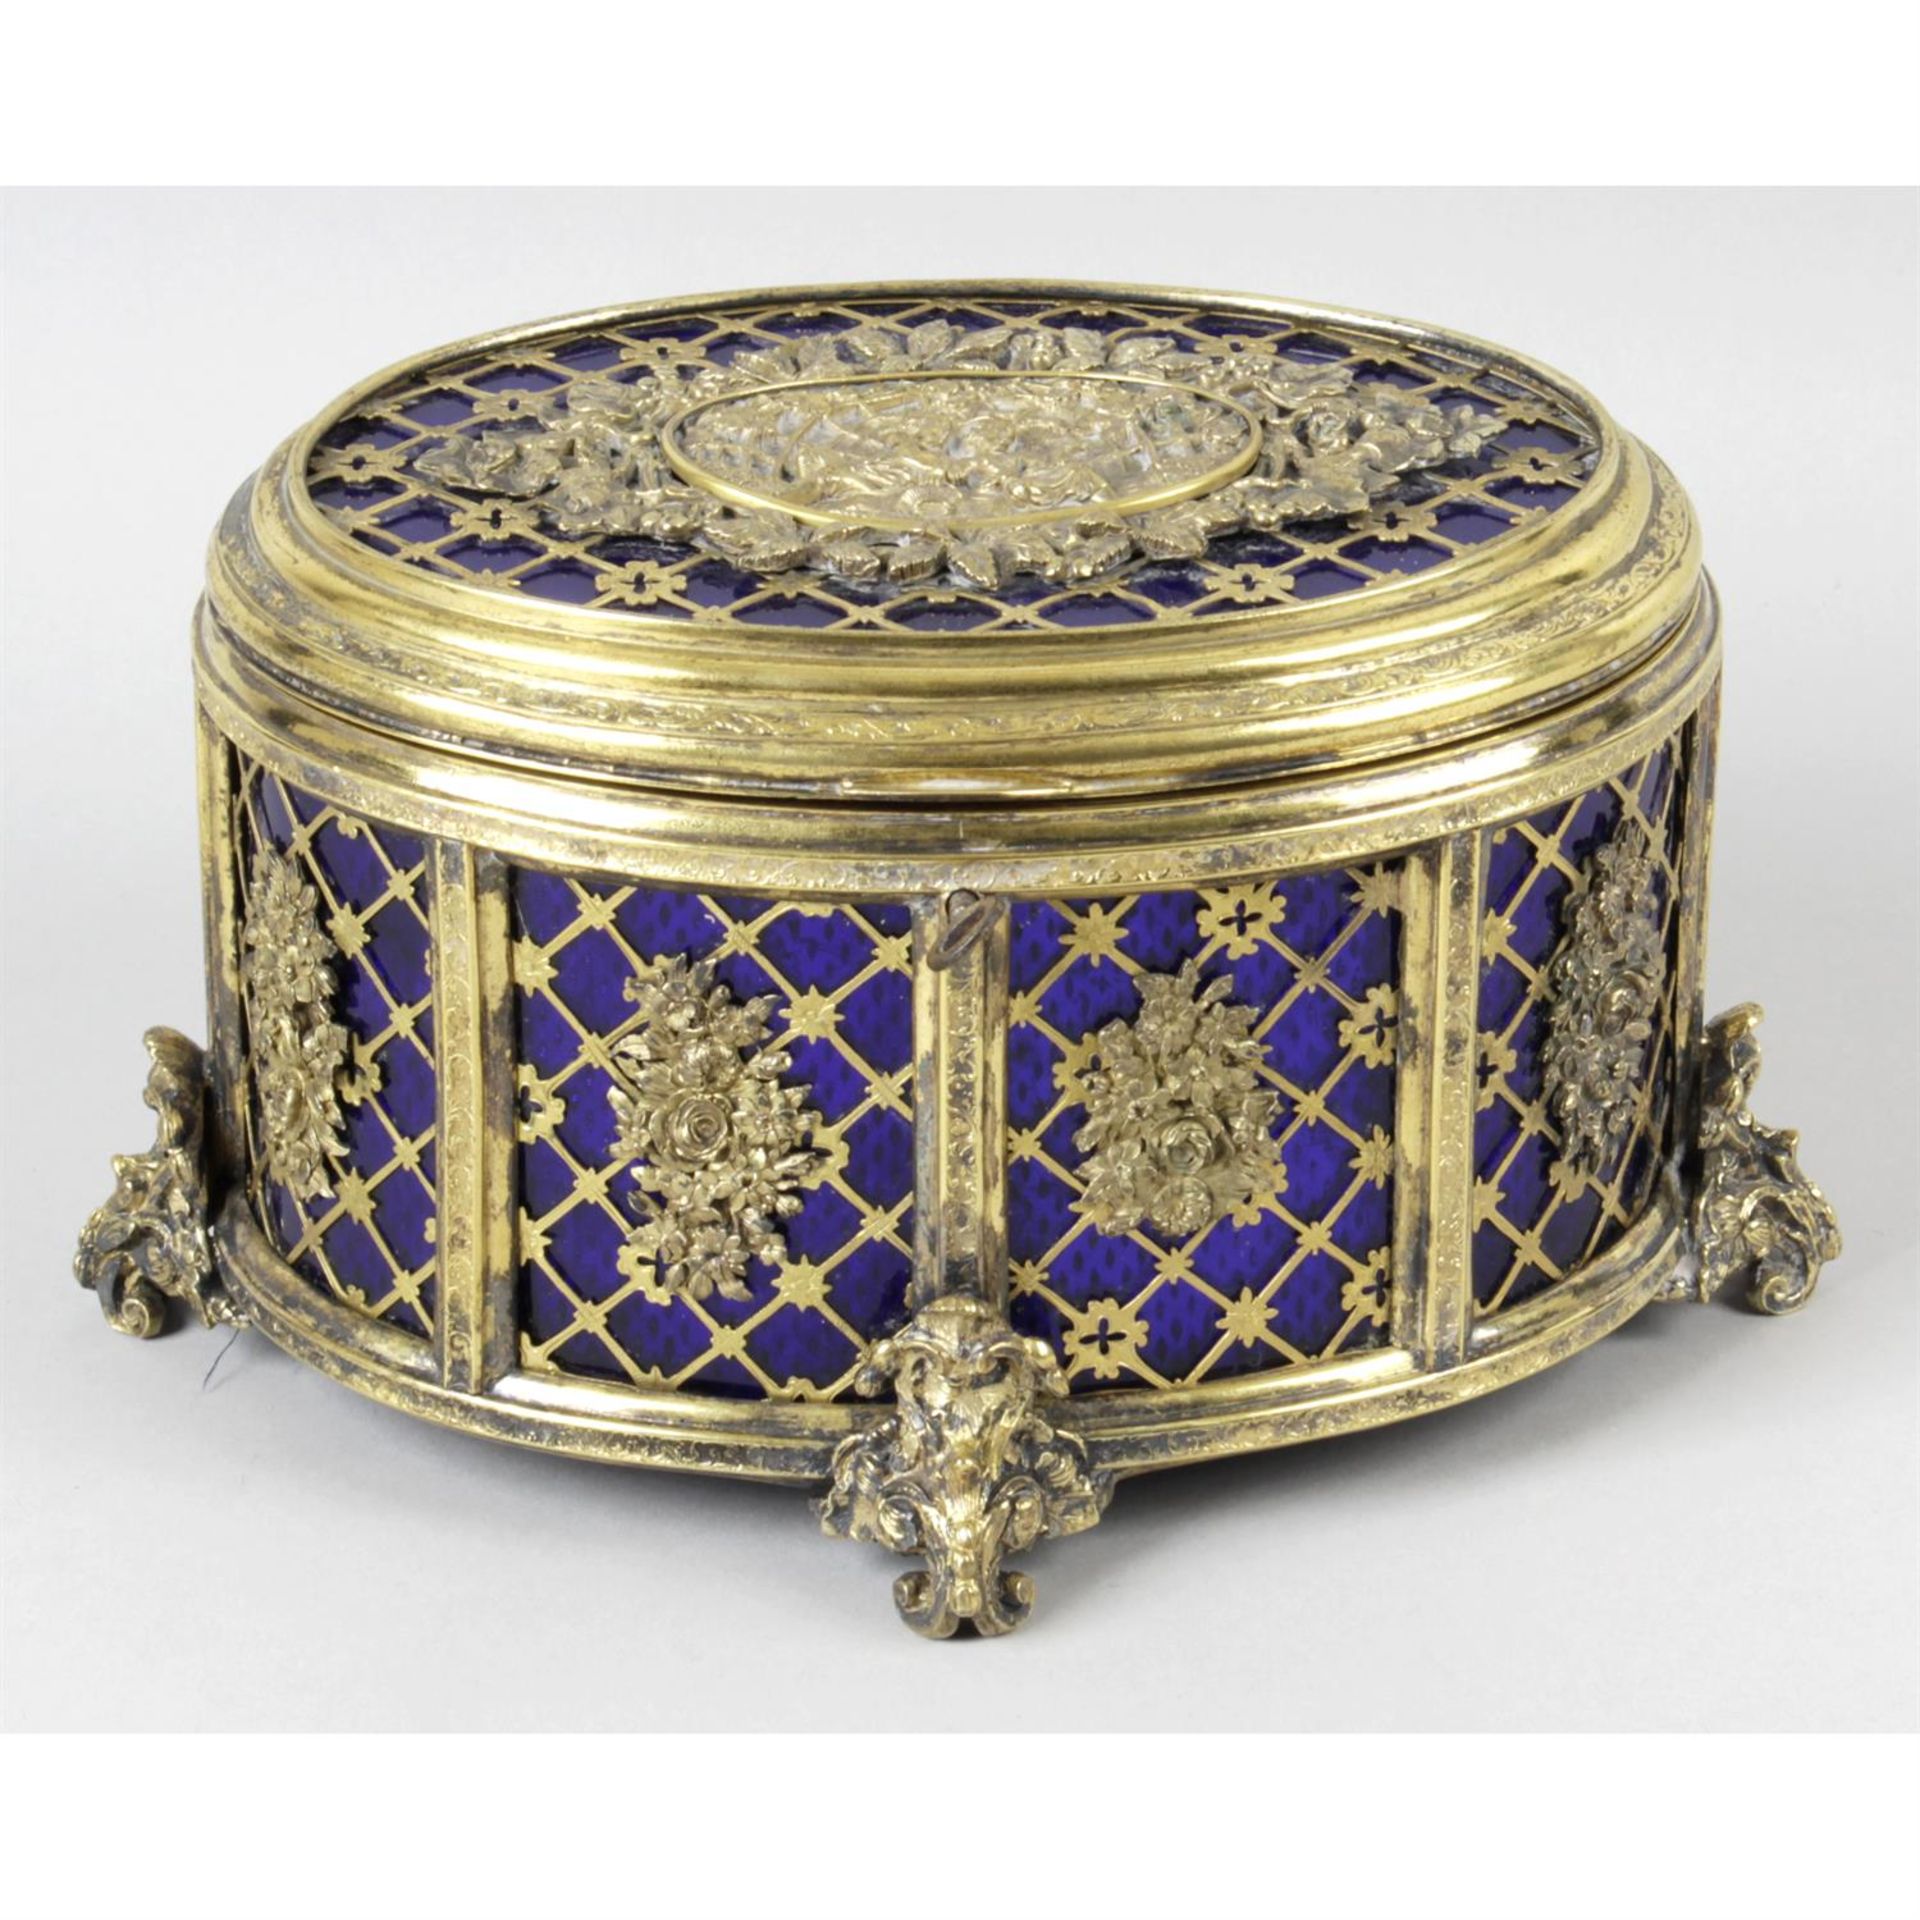 An elaborate late 19th century Boissier a Paris gilt metal casket and cover.